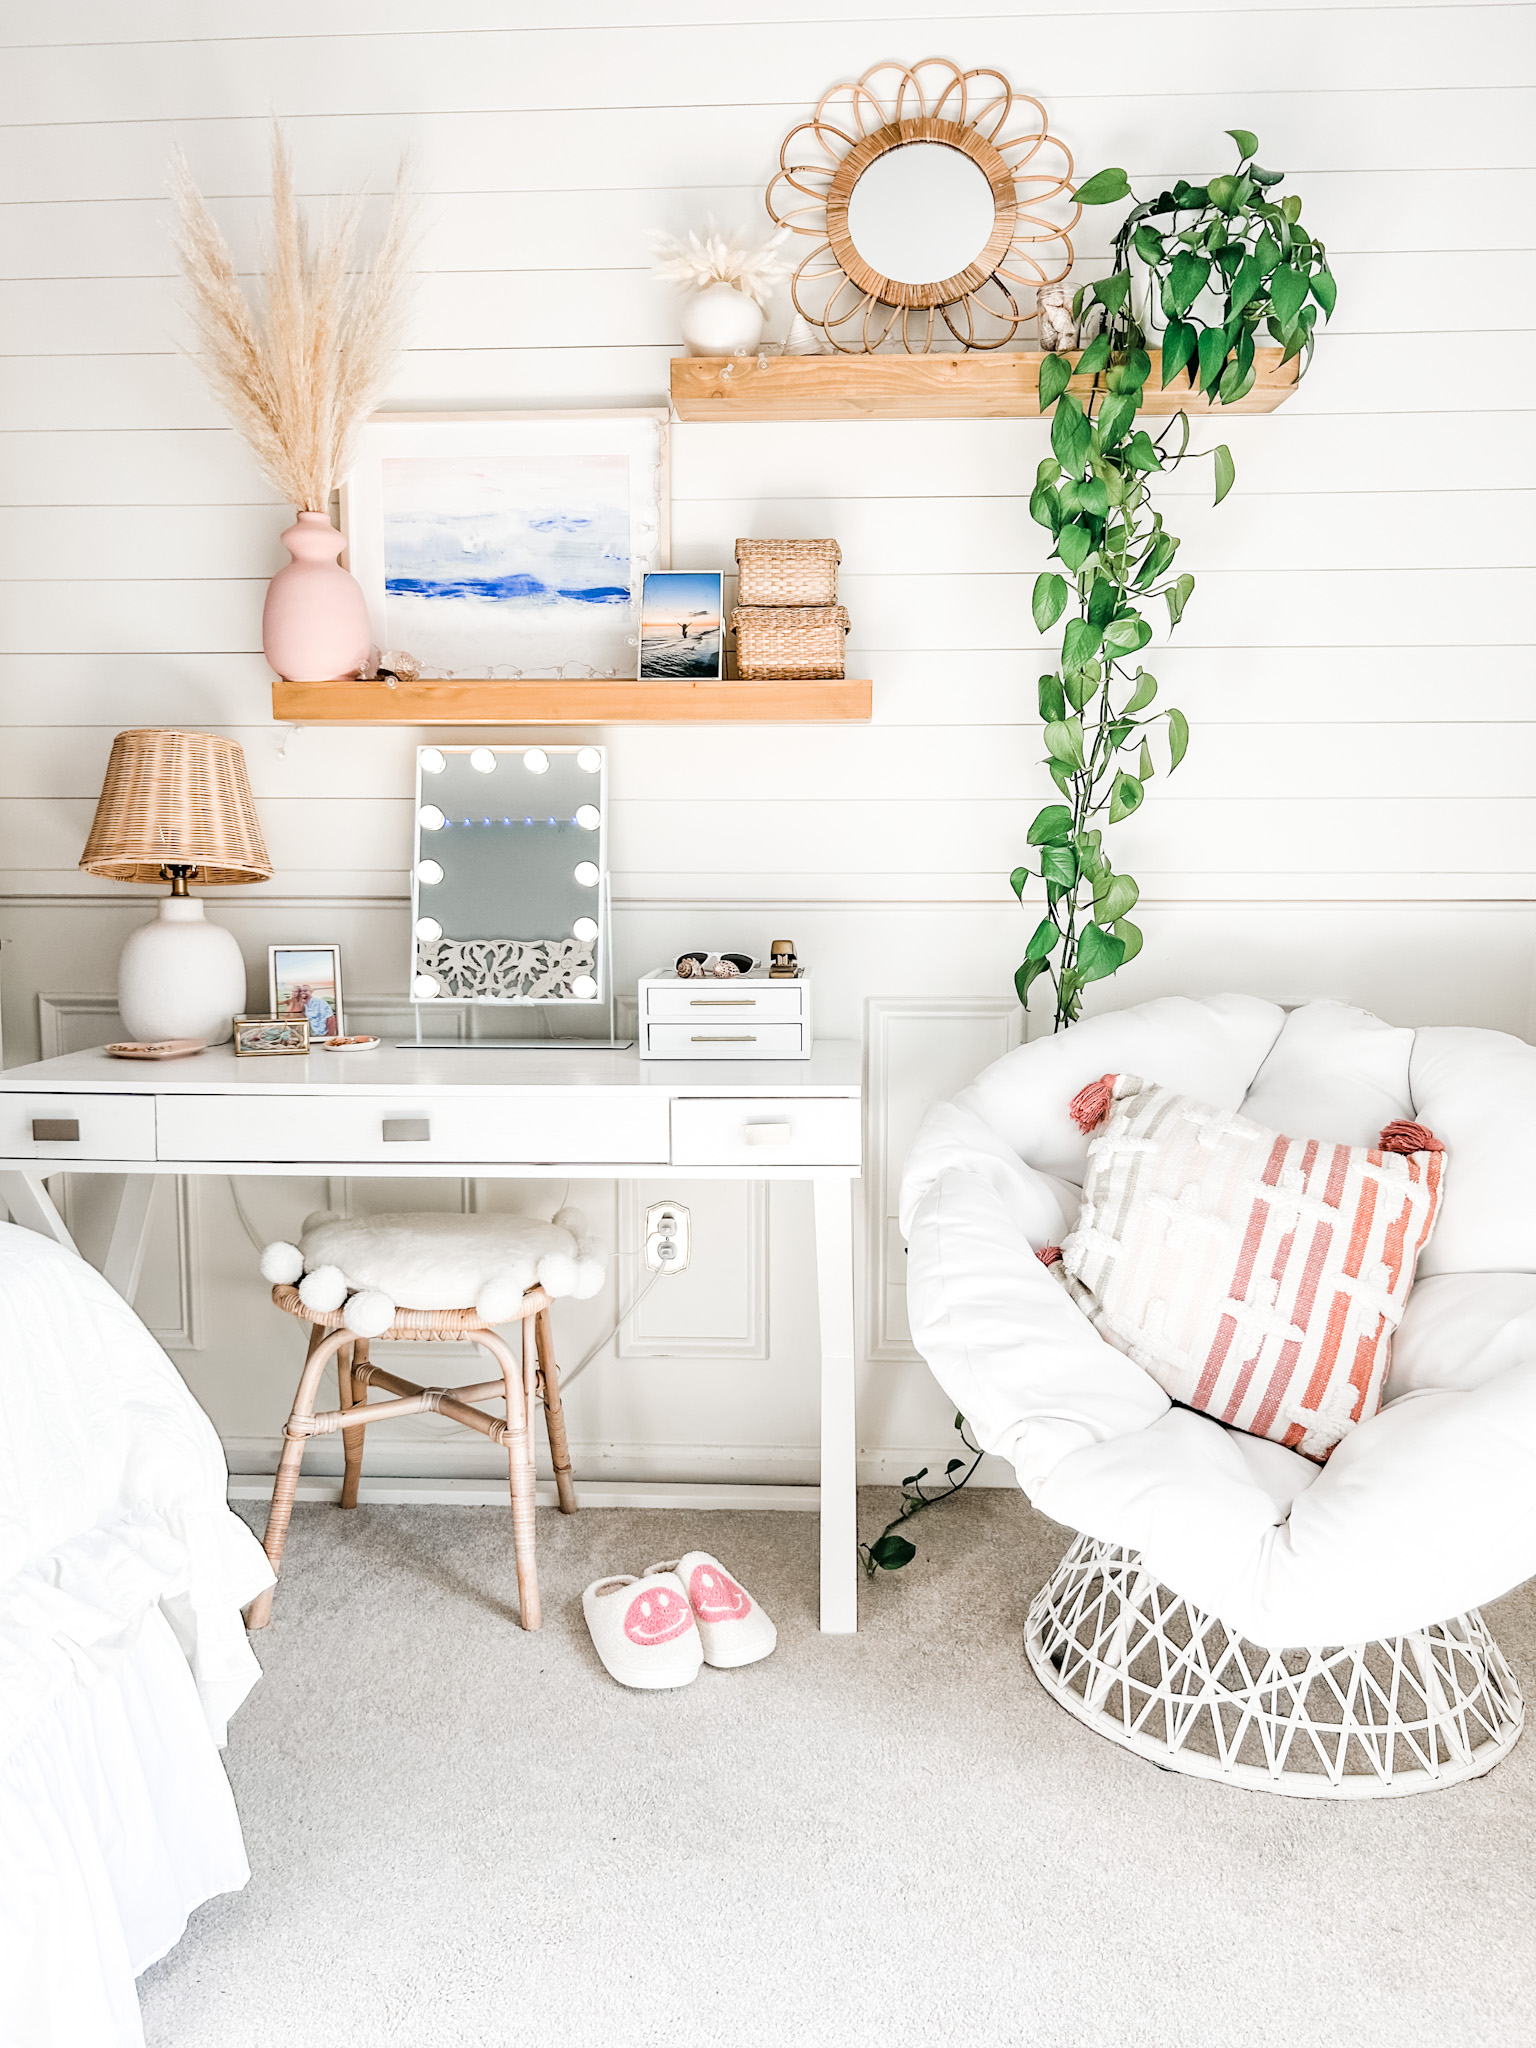 Teen Bedroom Shelves Ideas, Home Decor